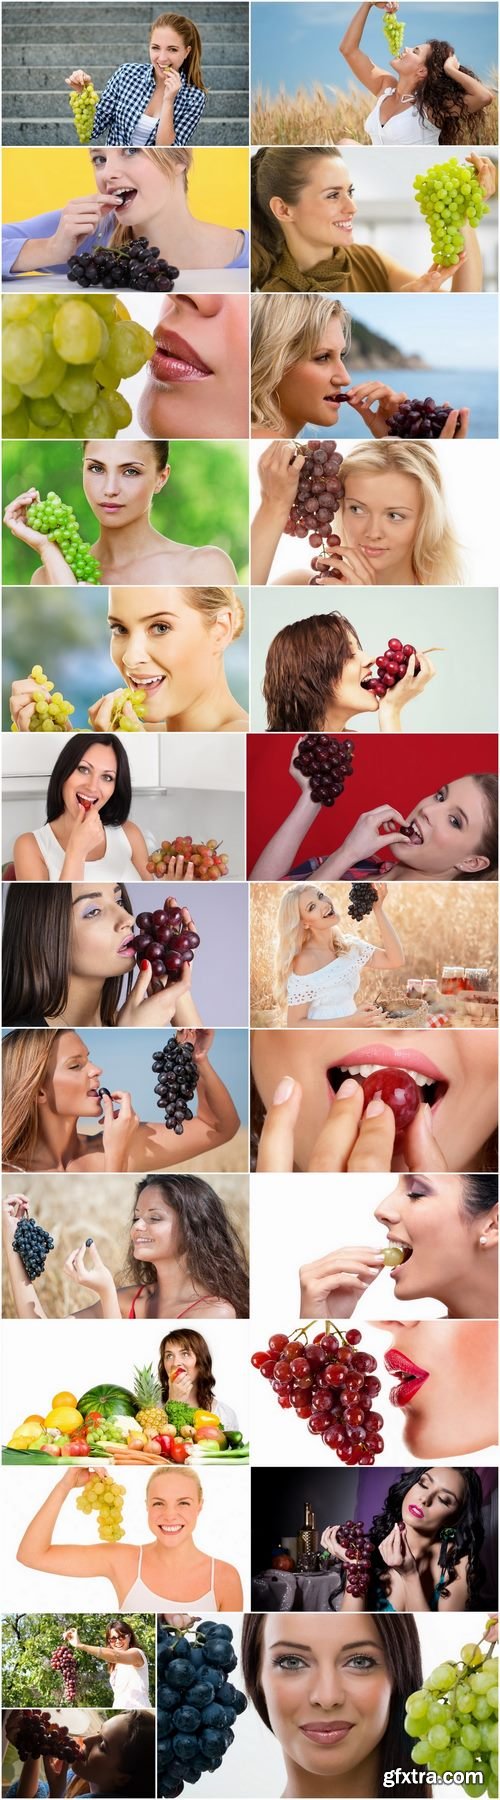 Girl woman eating grapes 25 HQ Jpeg